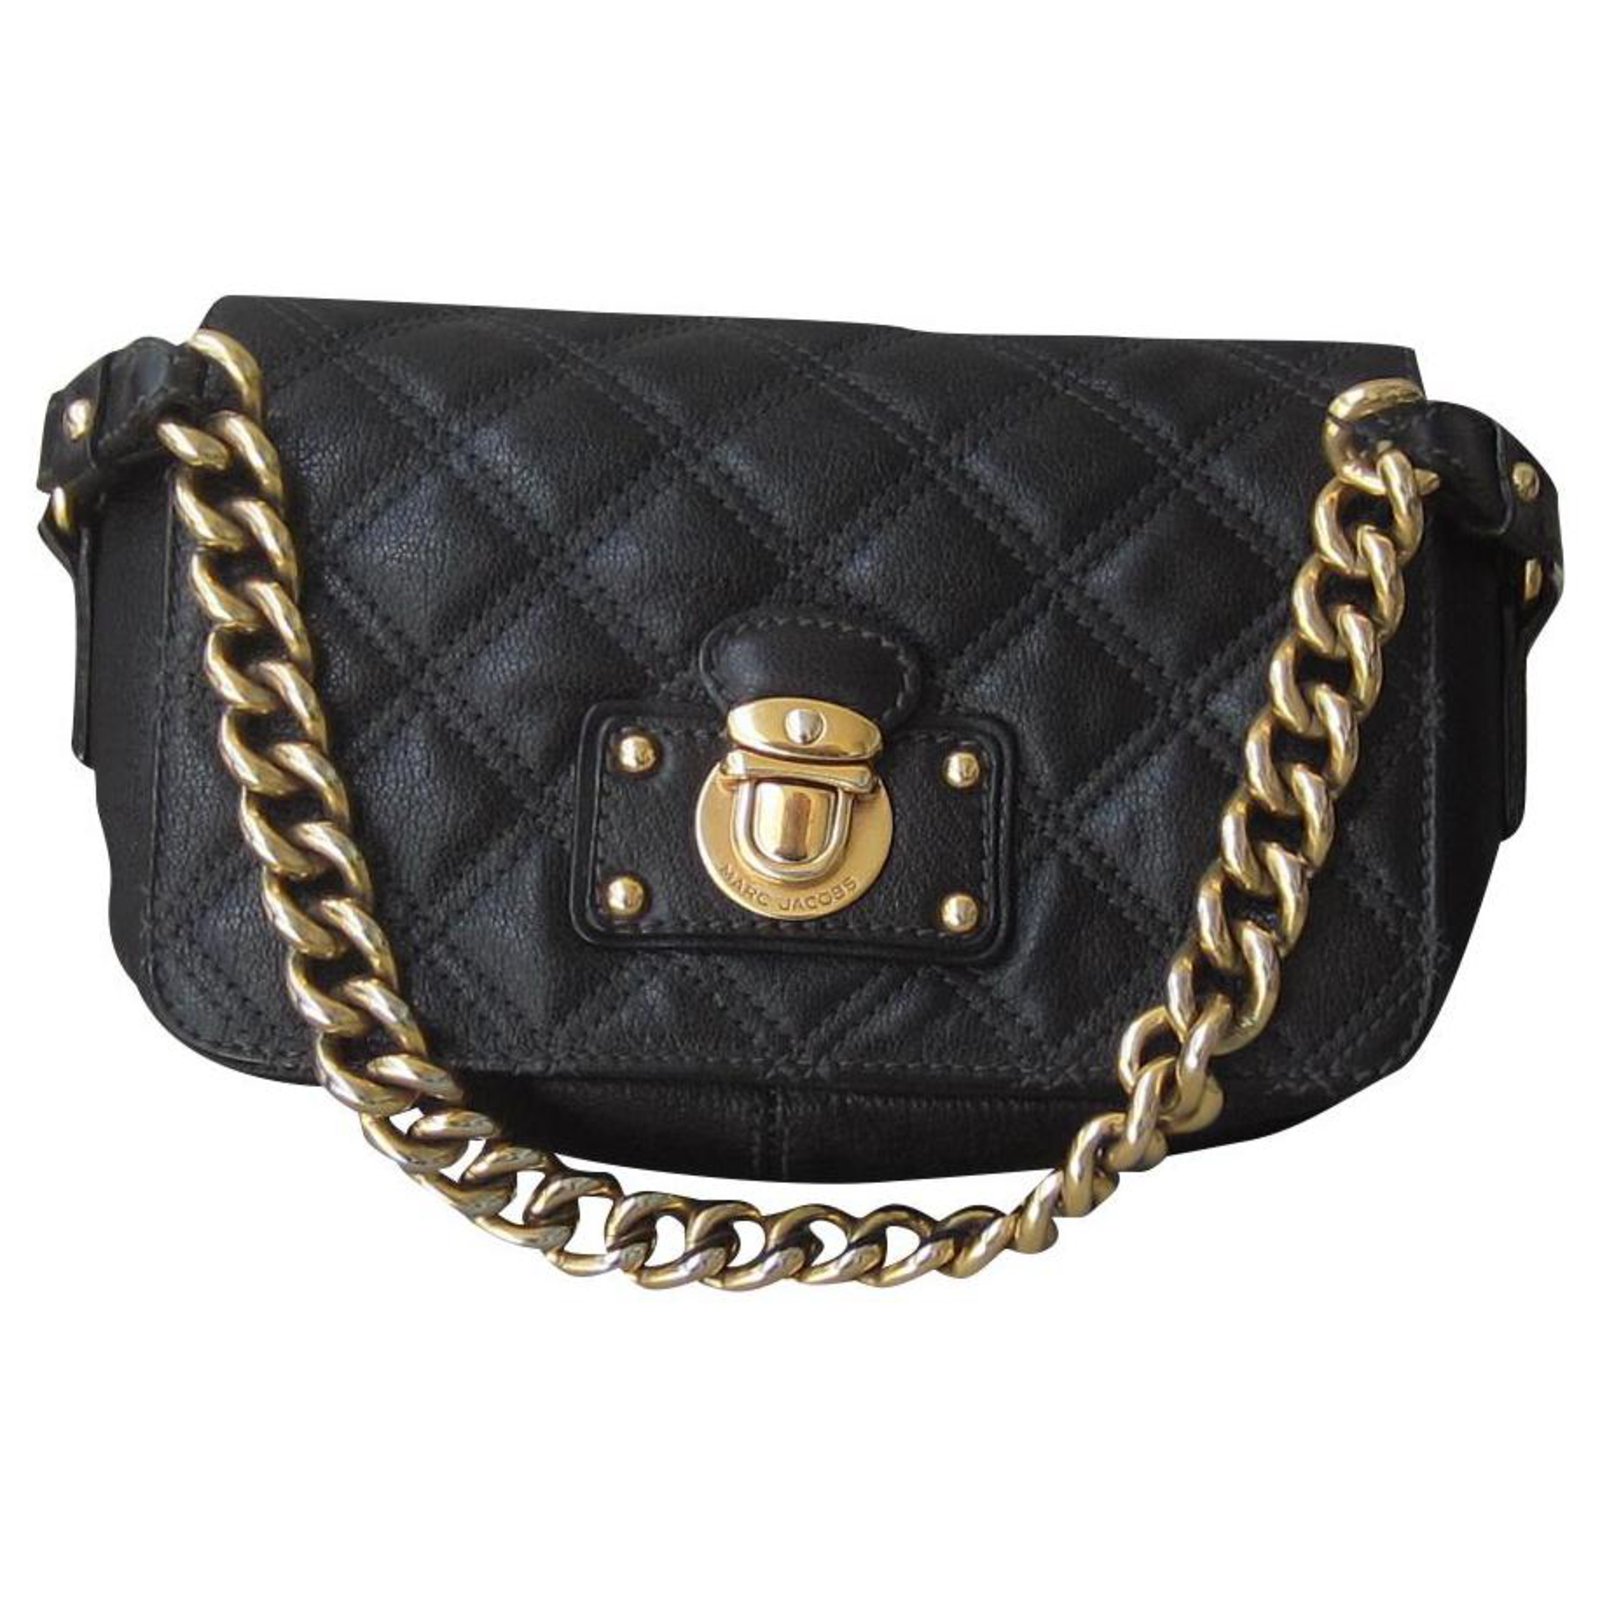 Marc Jacobs M001585 Grind Black Women Leather Handbag, Small: Handbags:  Amazon.com